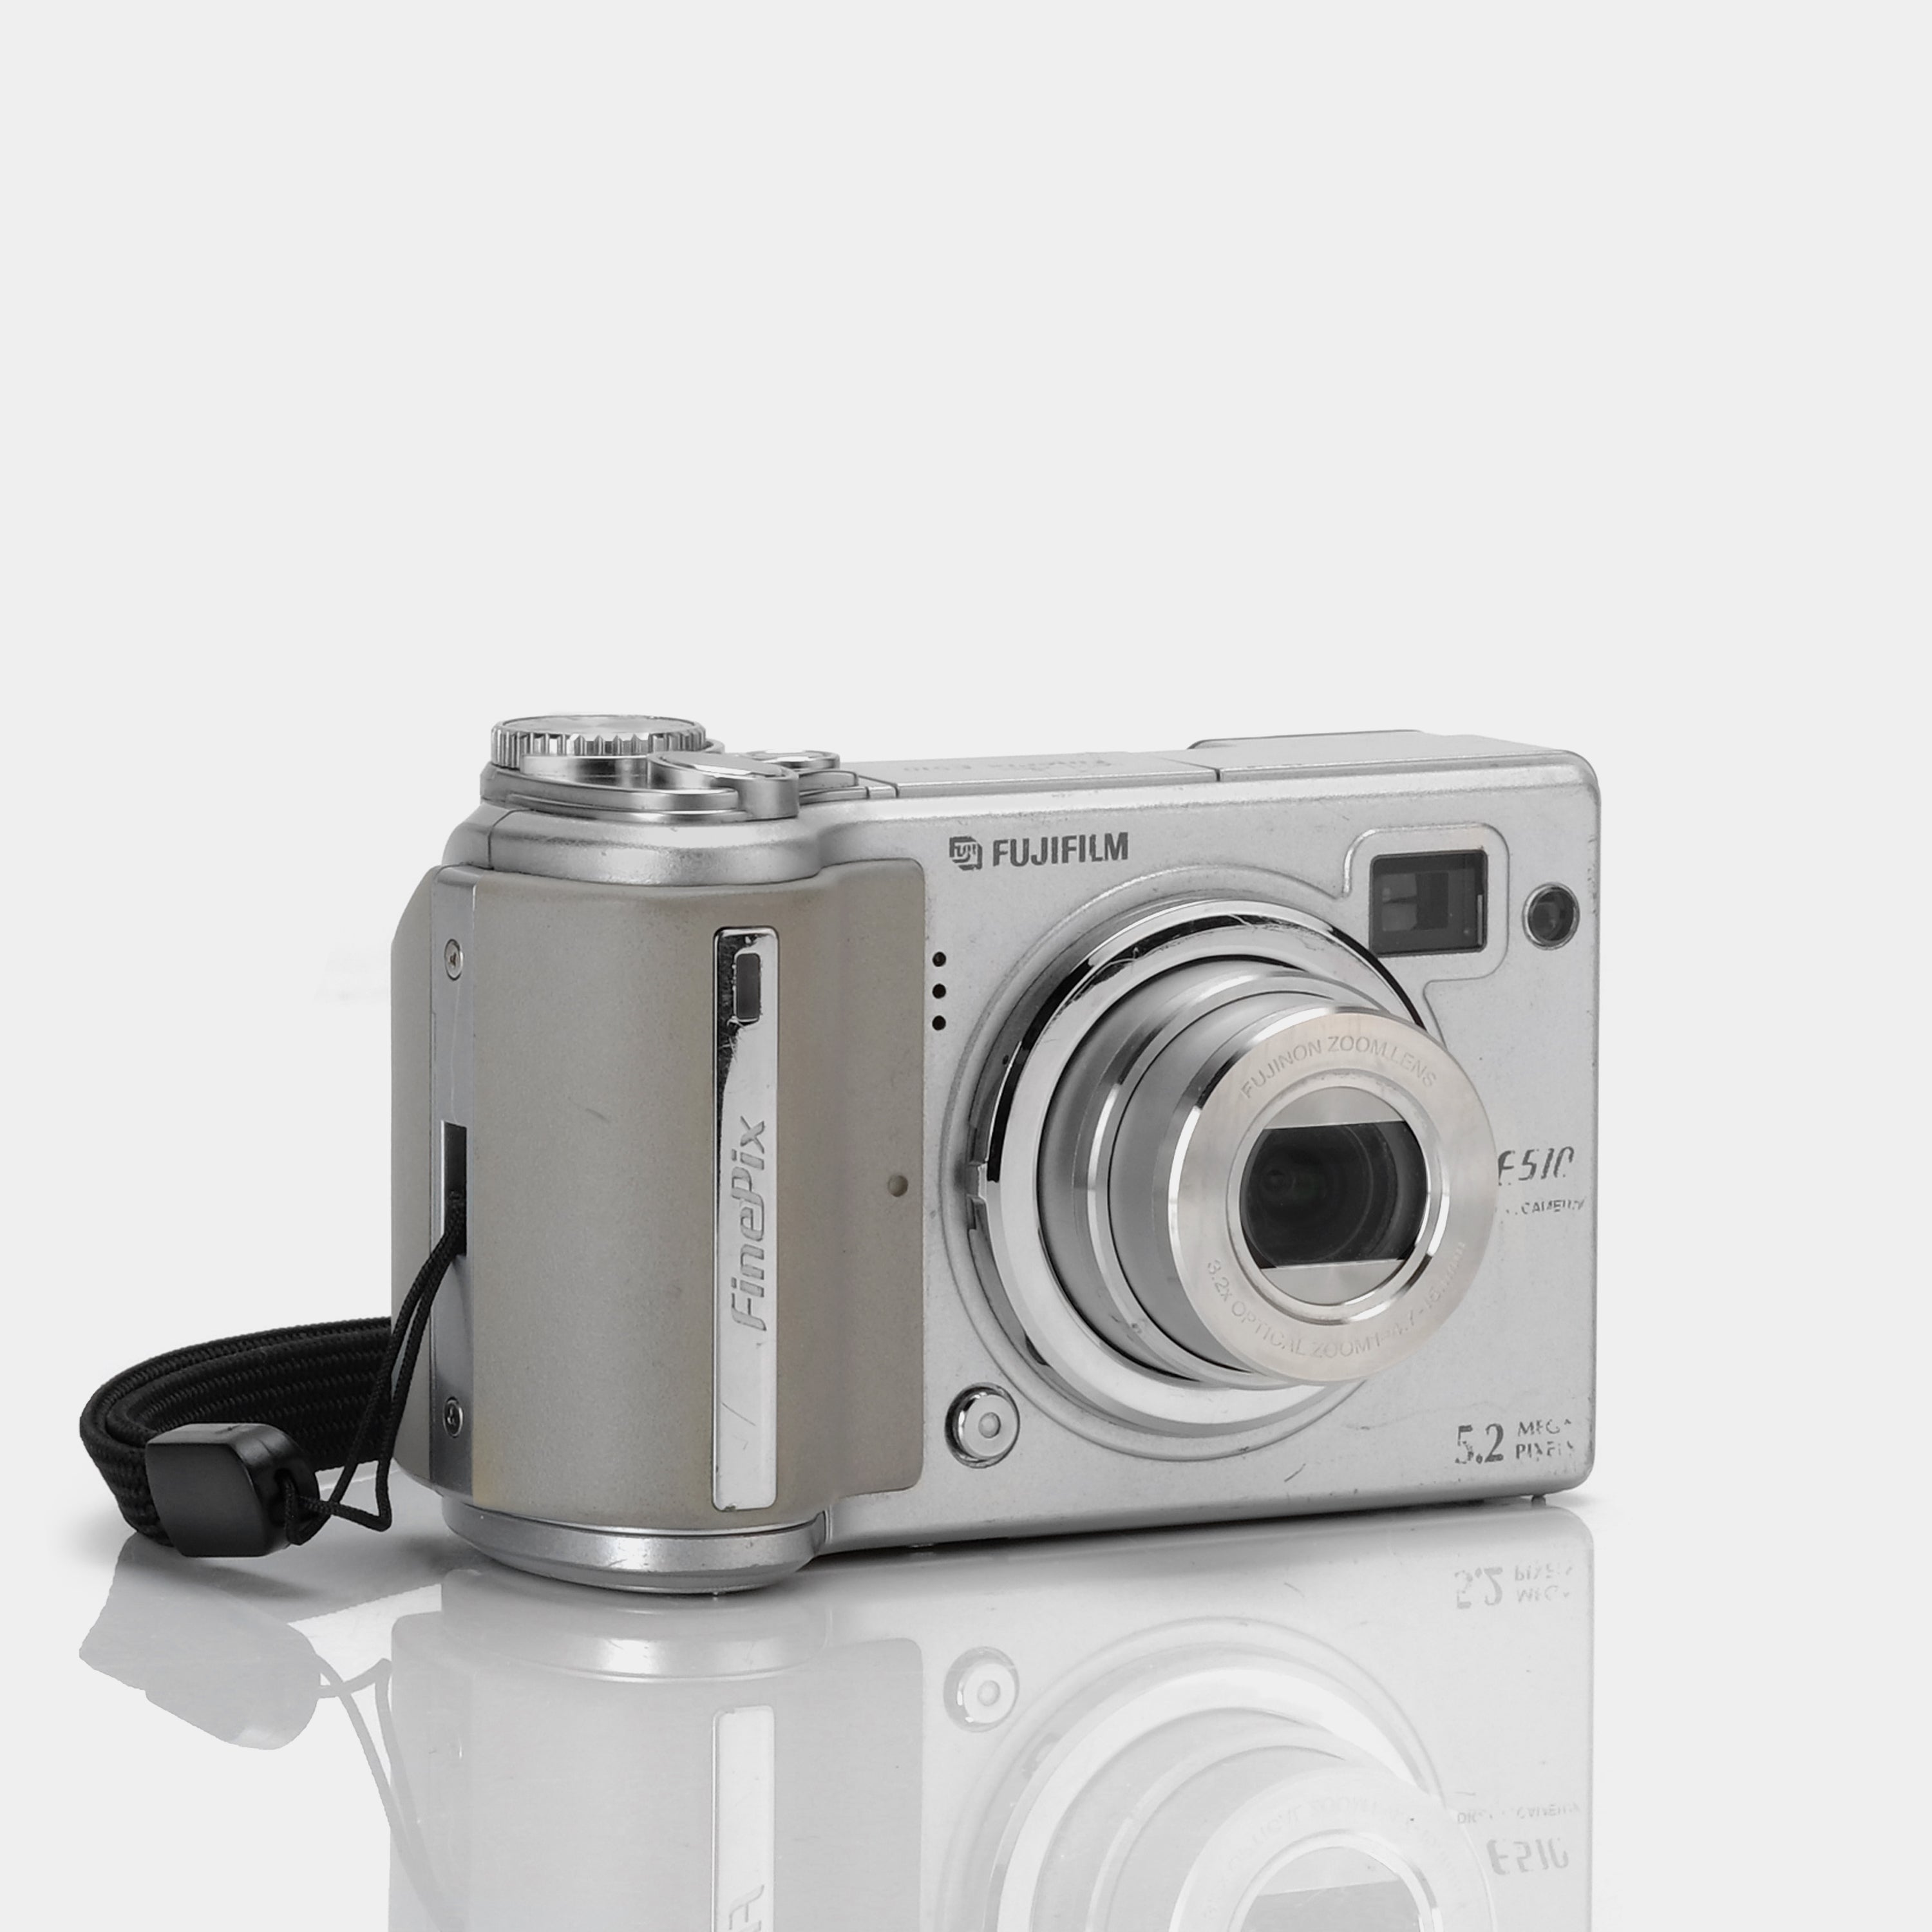 Fujifilm FinePix E510 Point and Shoot Digital Camera